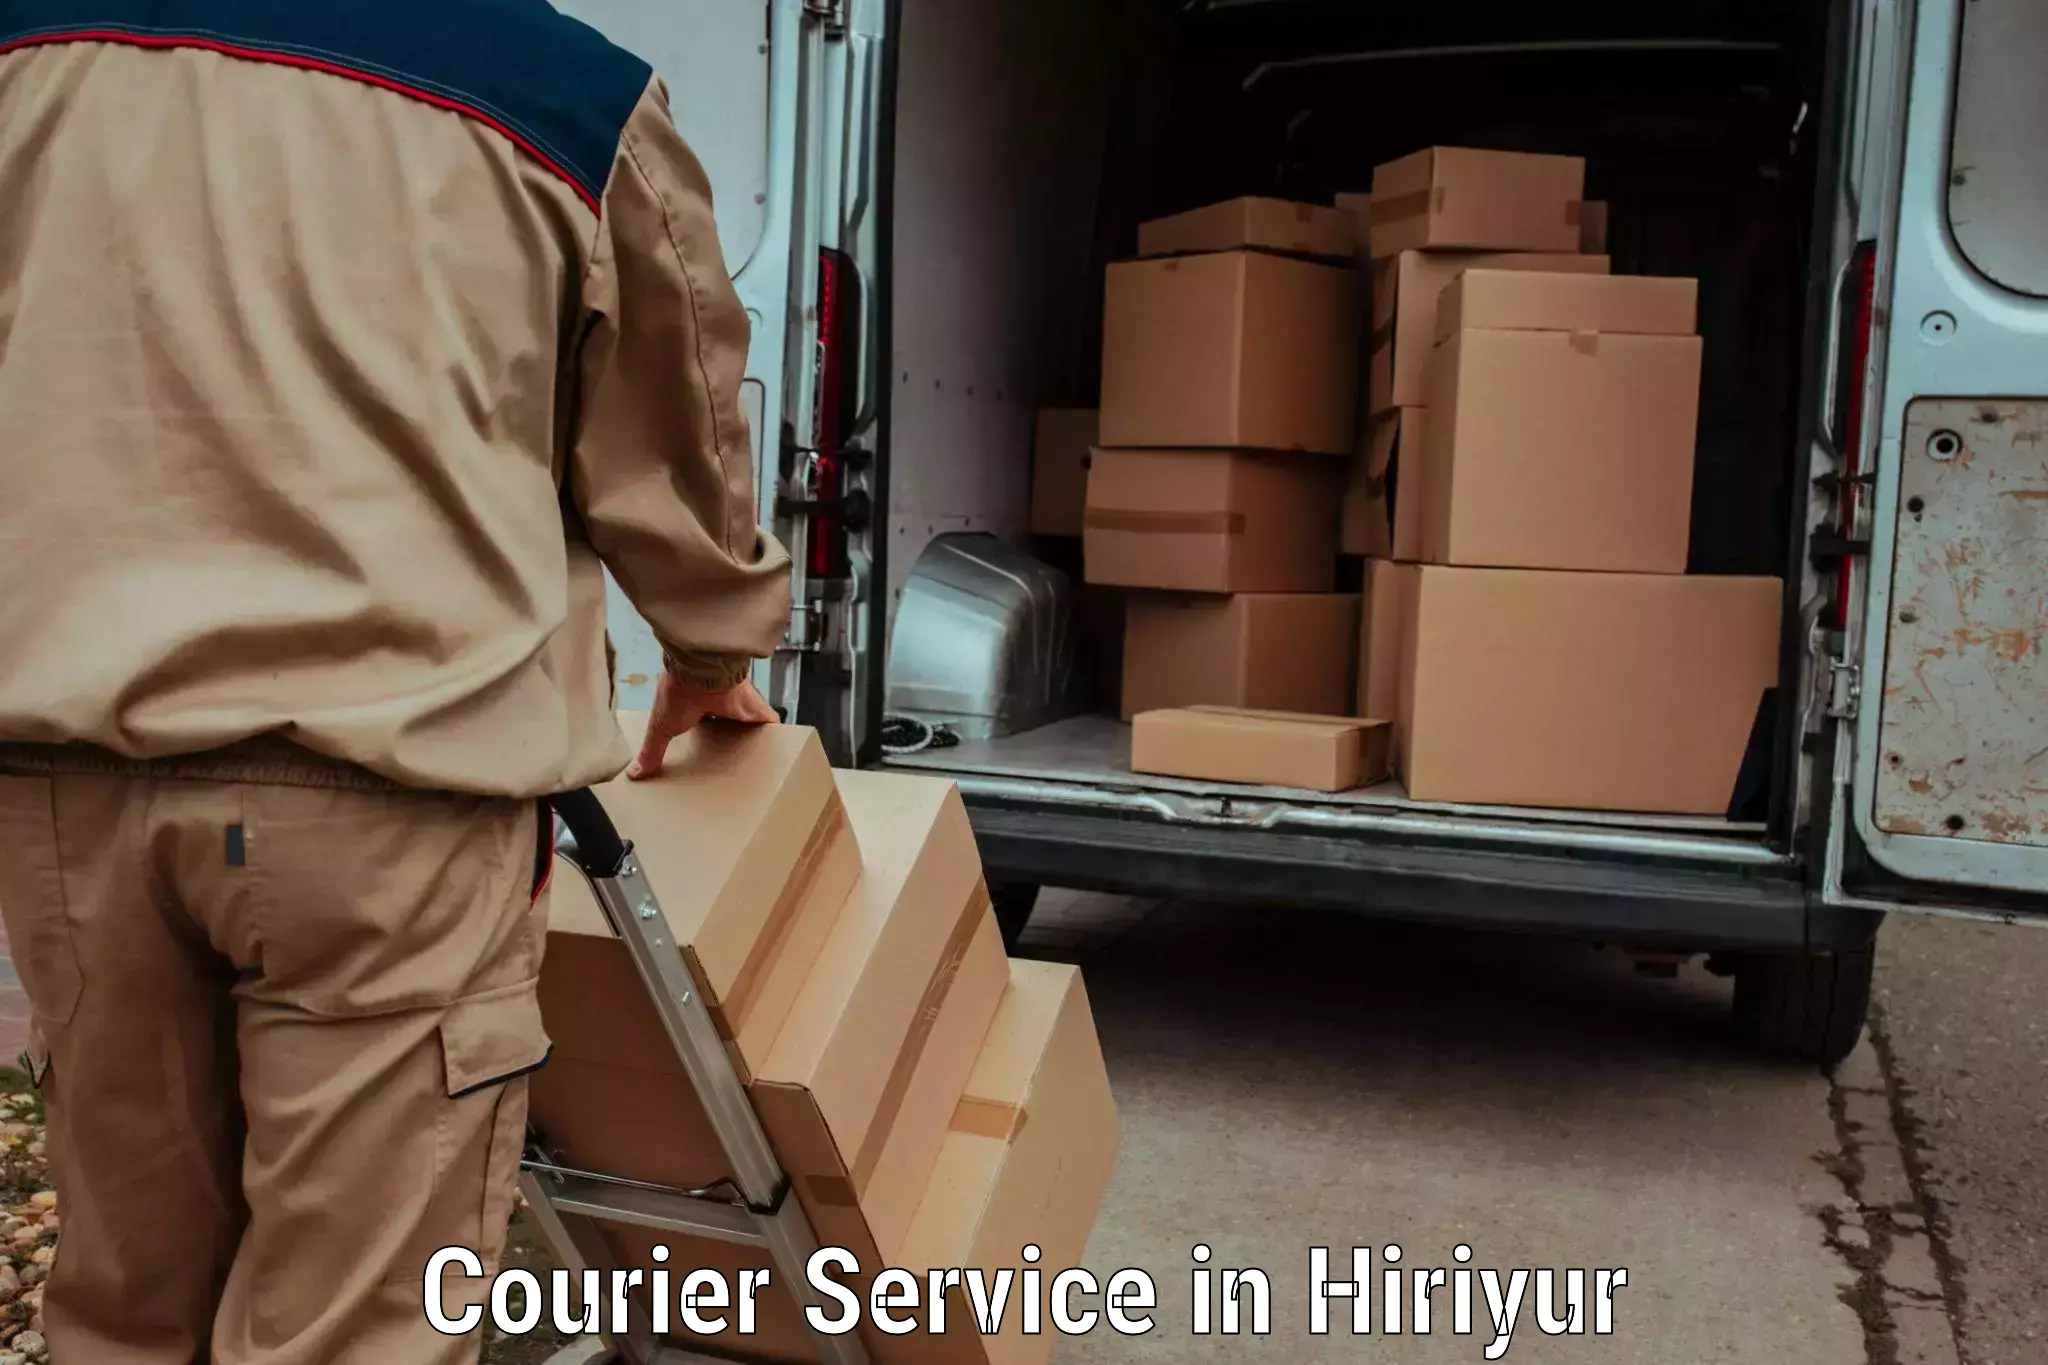 Efficient parcel delivery in Hiriyur